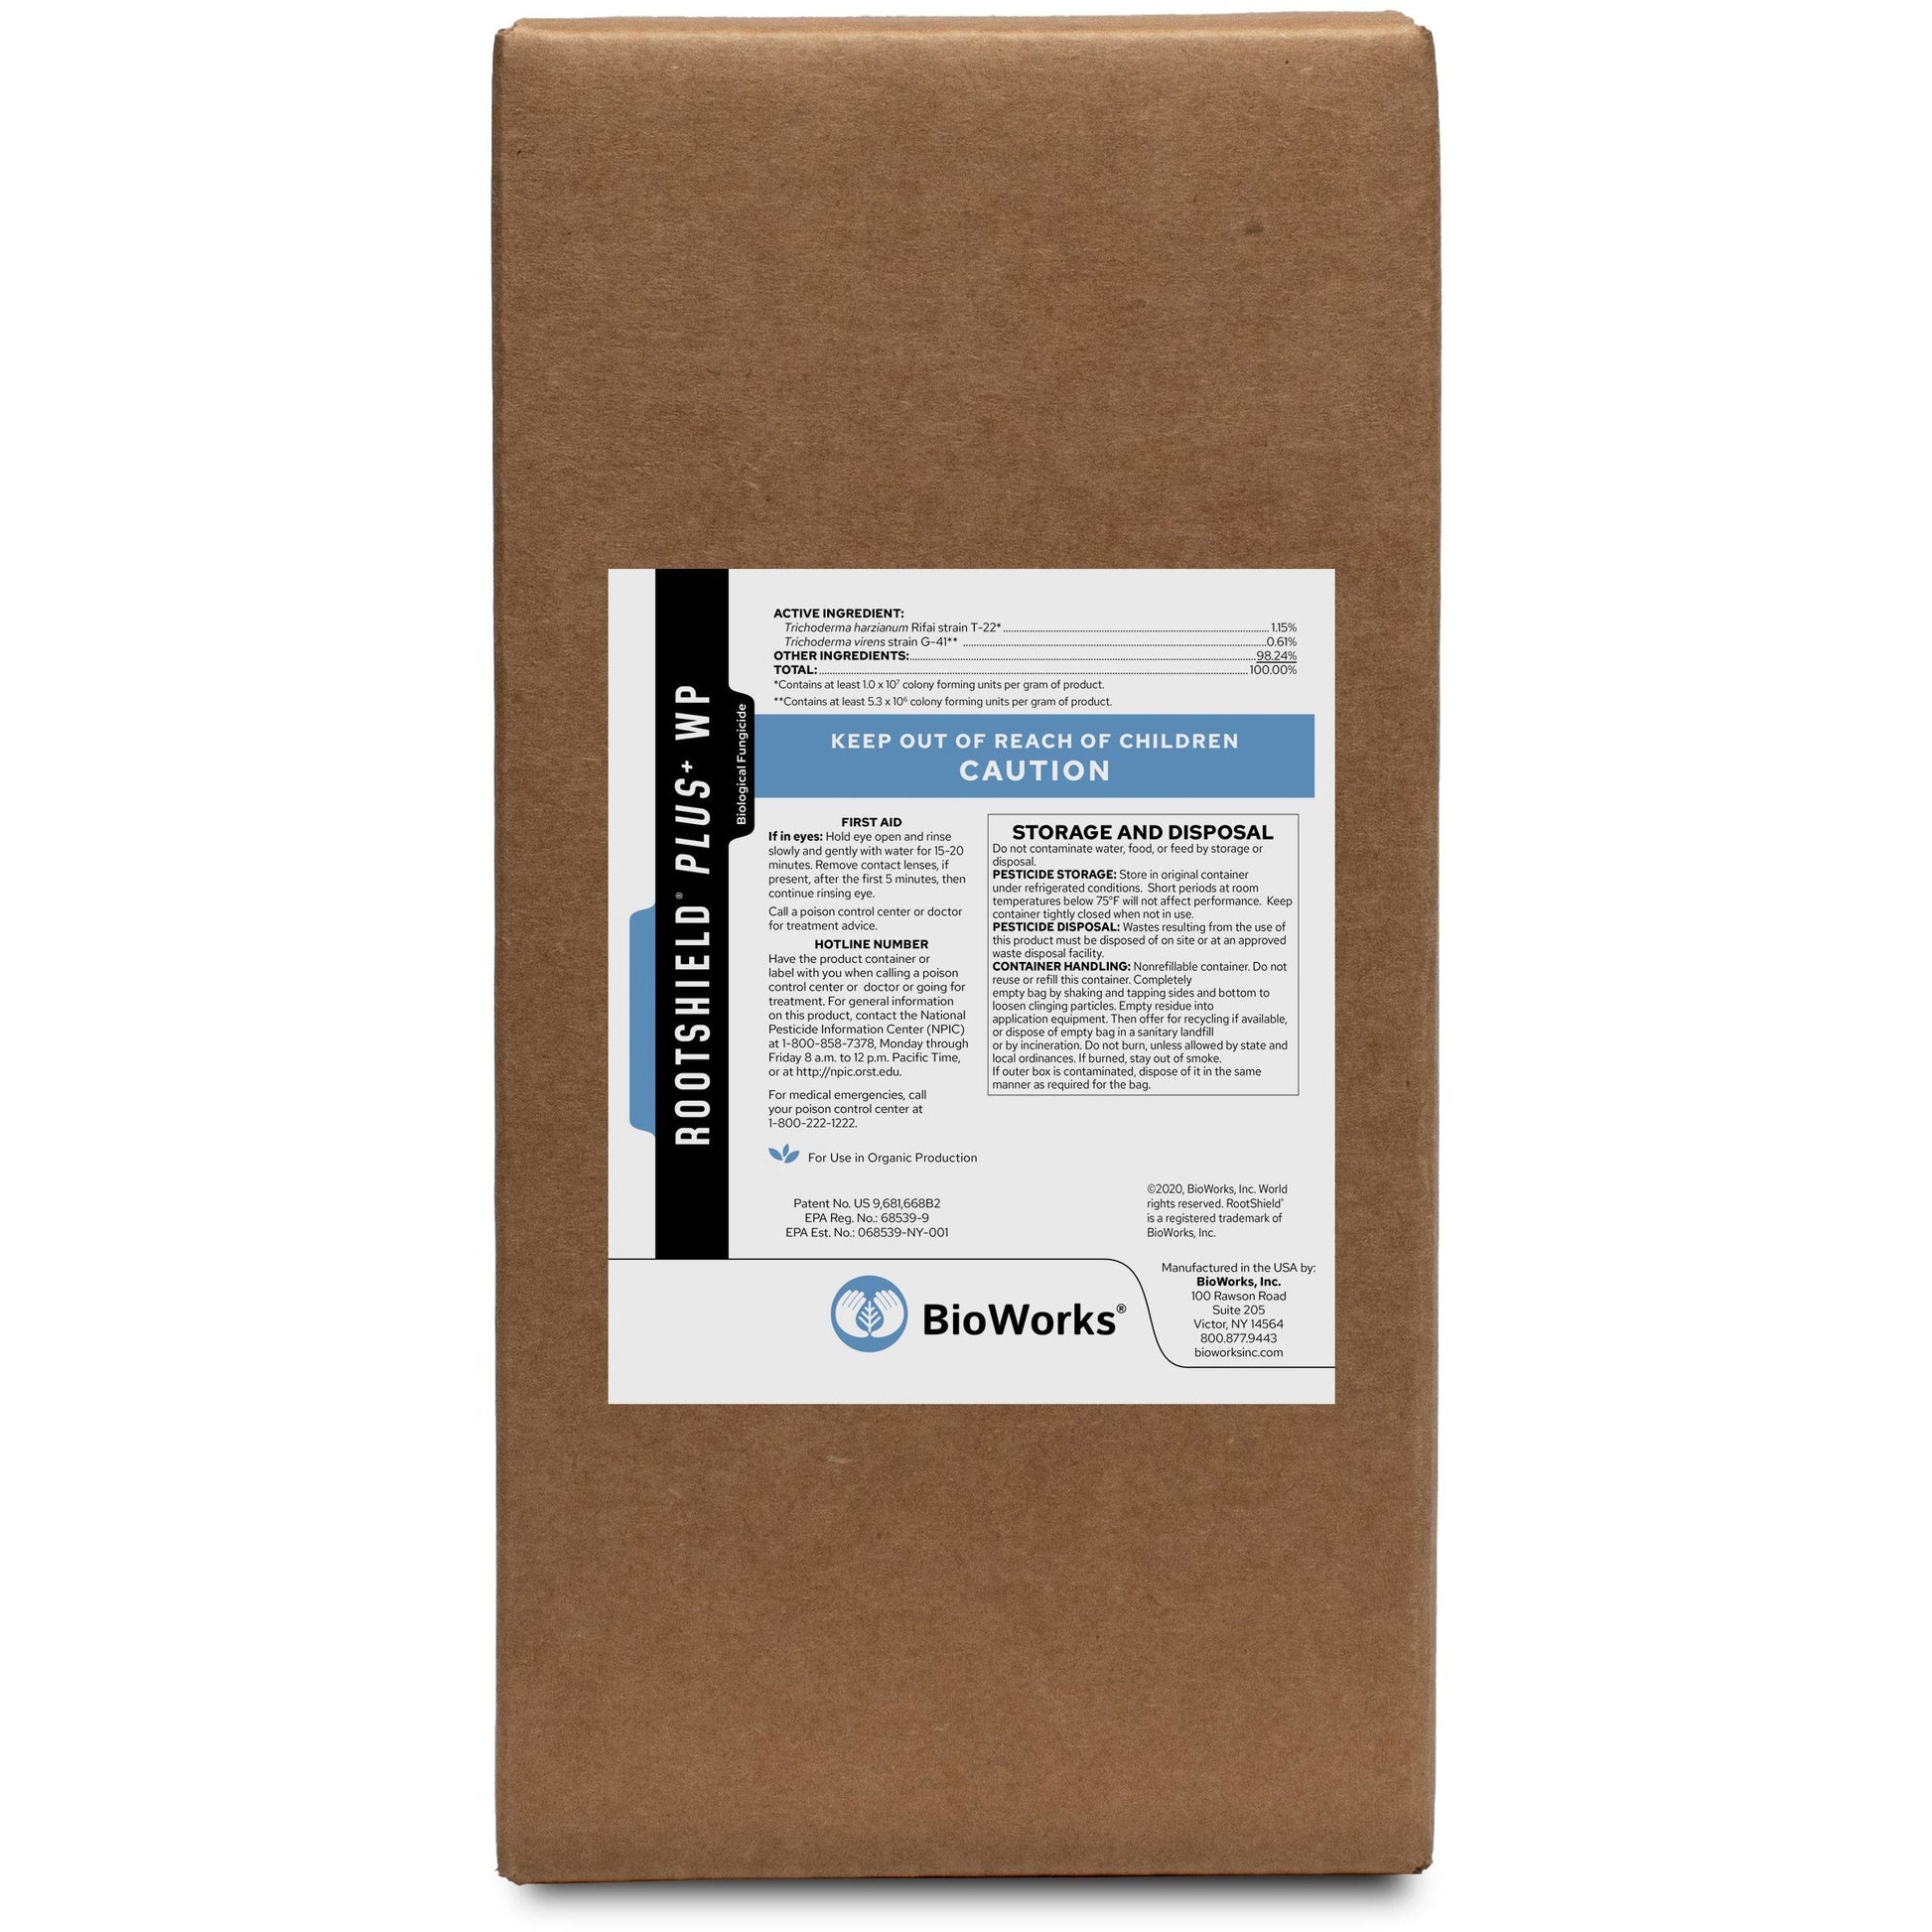 RootShield Plus WP 30 lb. Organic Fungicide